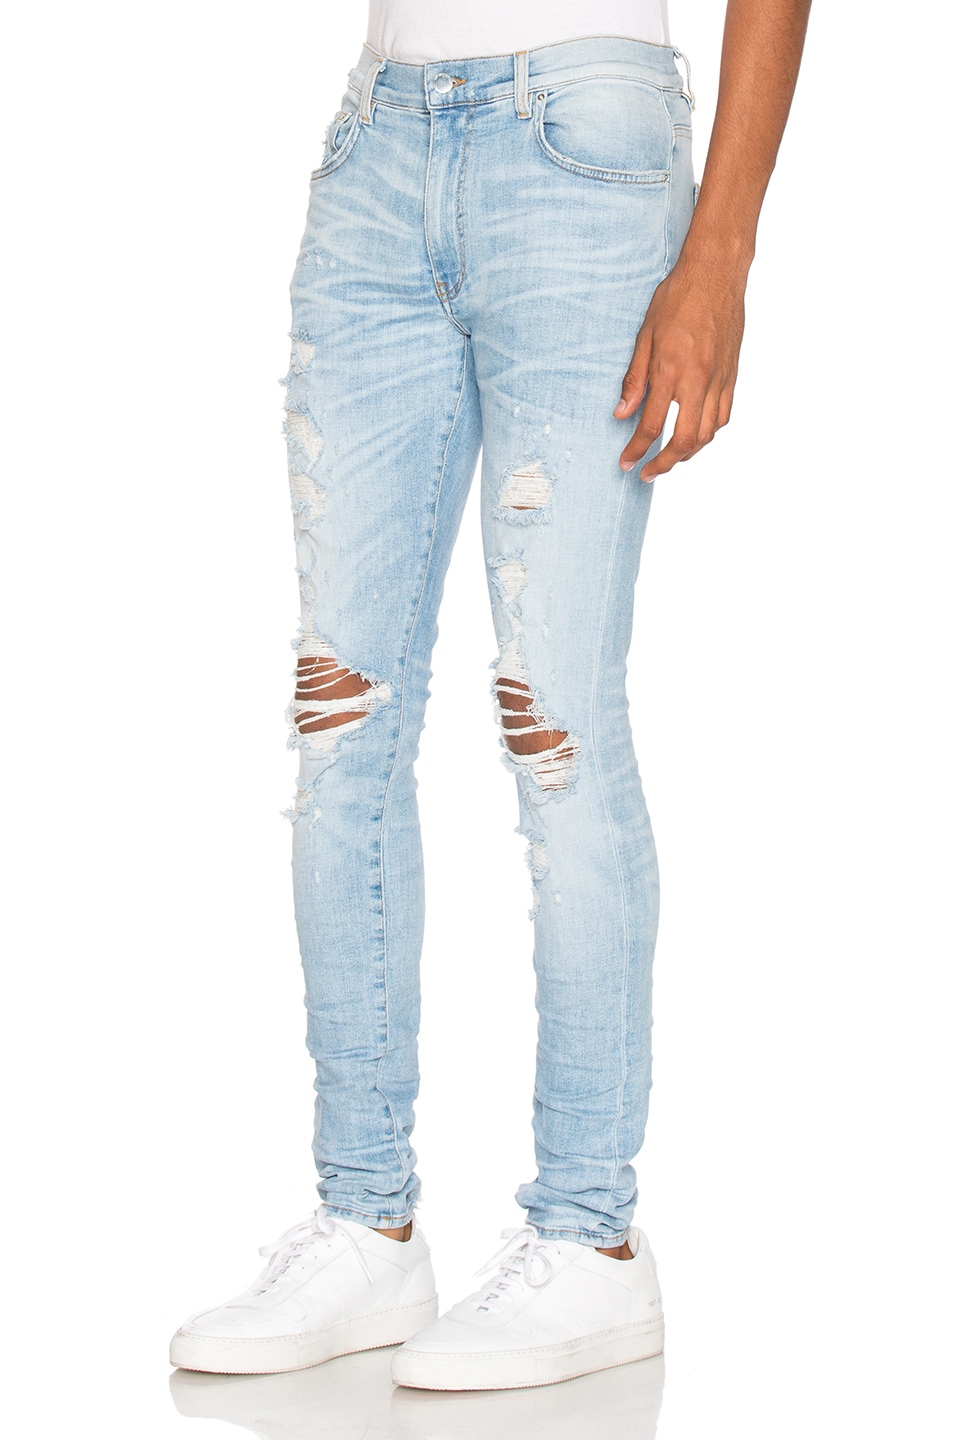 Amiri Thrasher Jeans in Rosebowl | FWRD